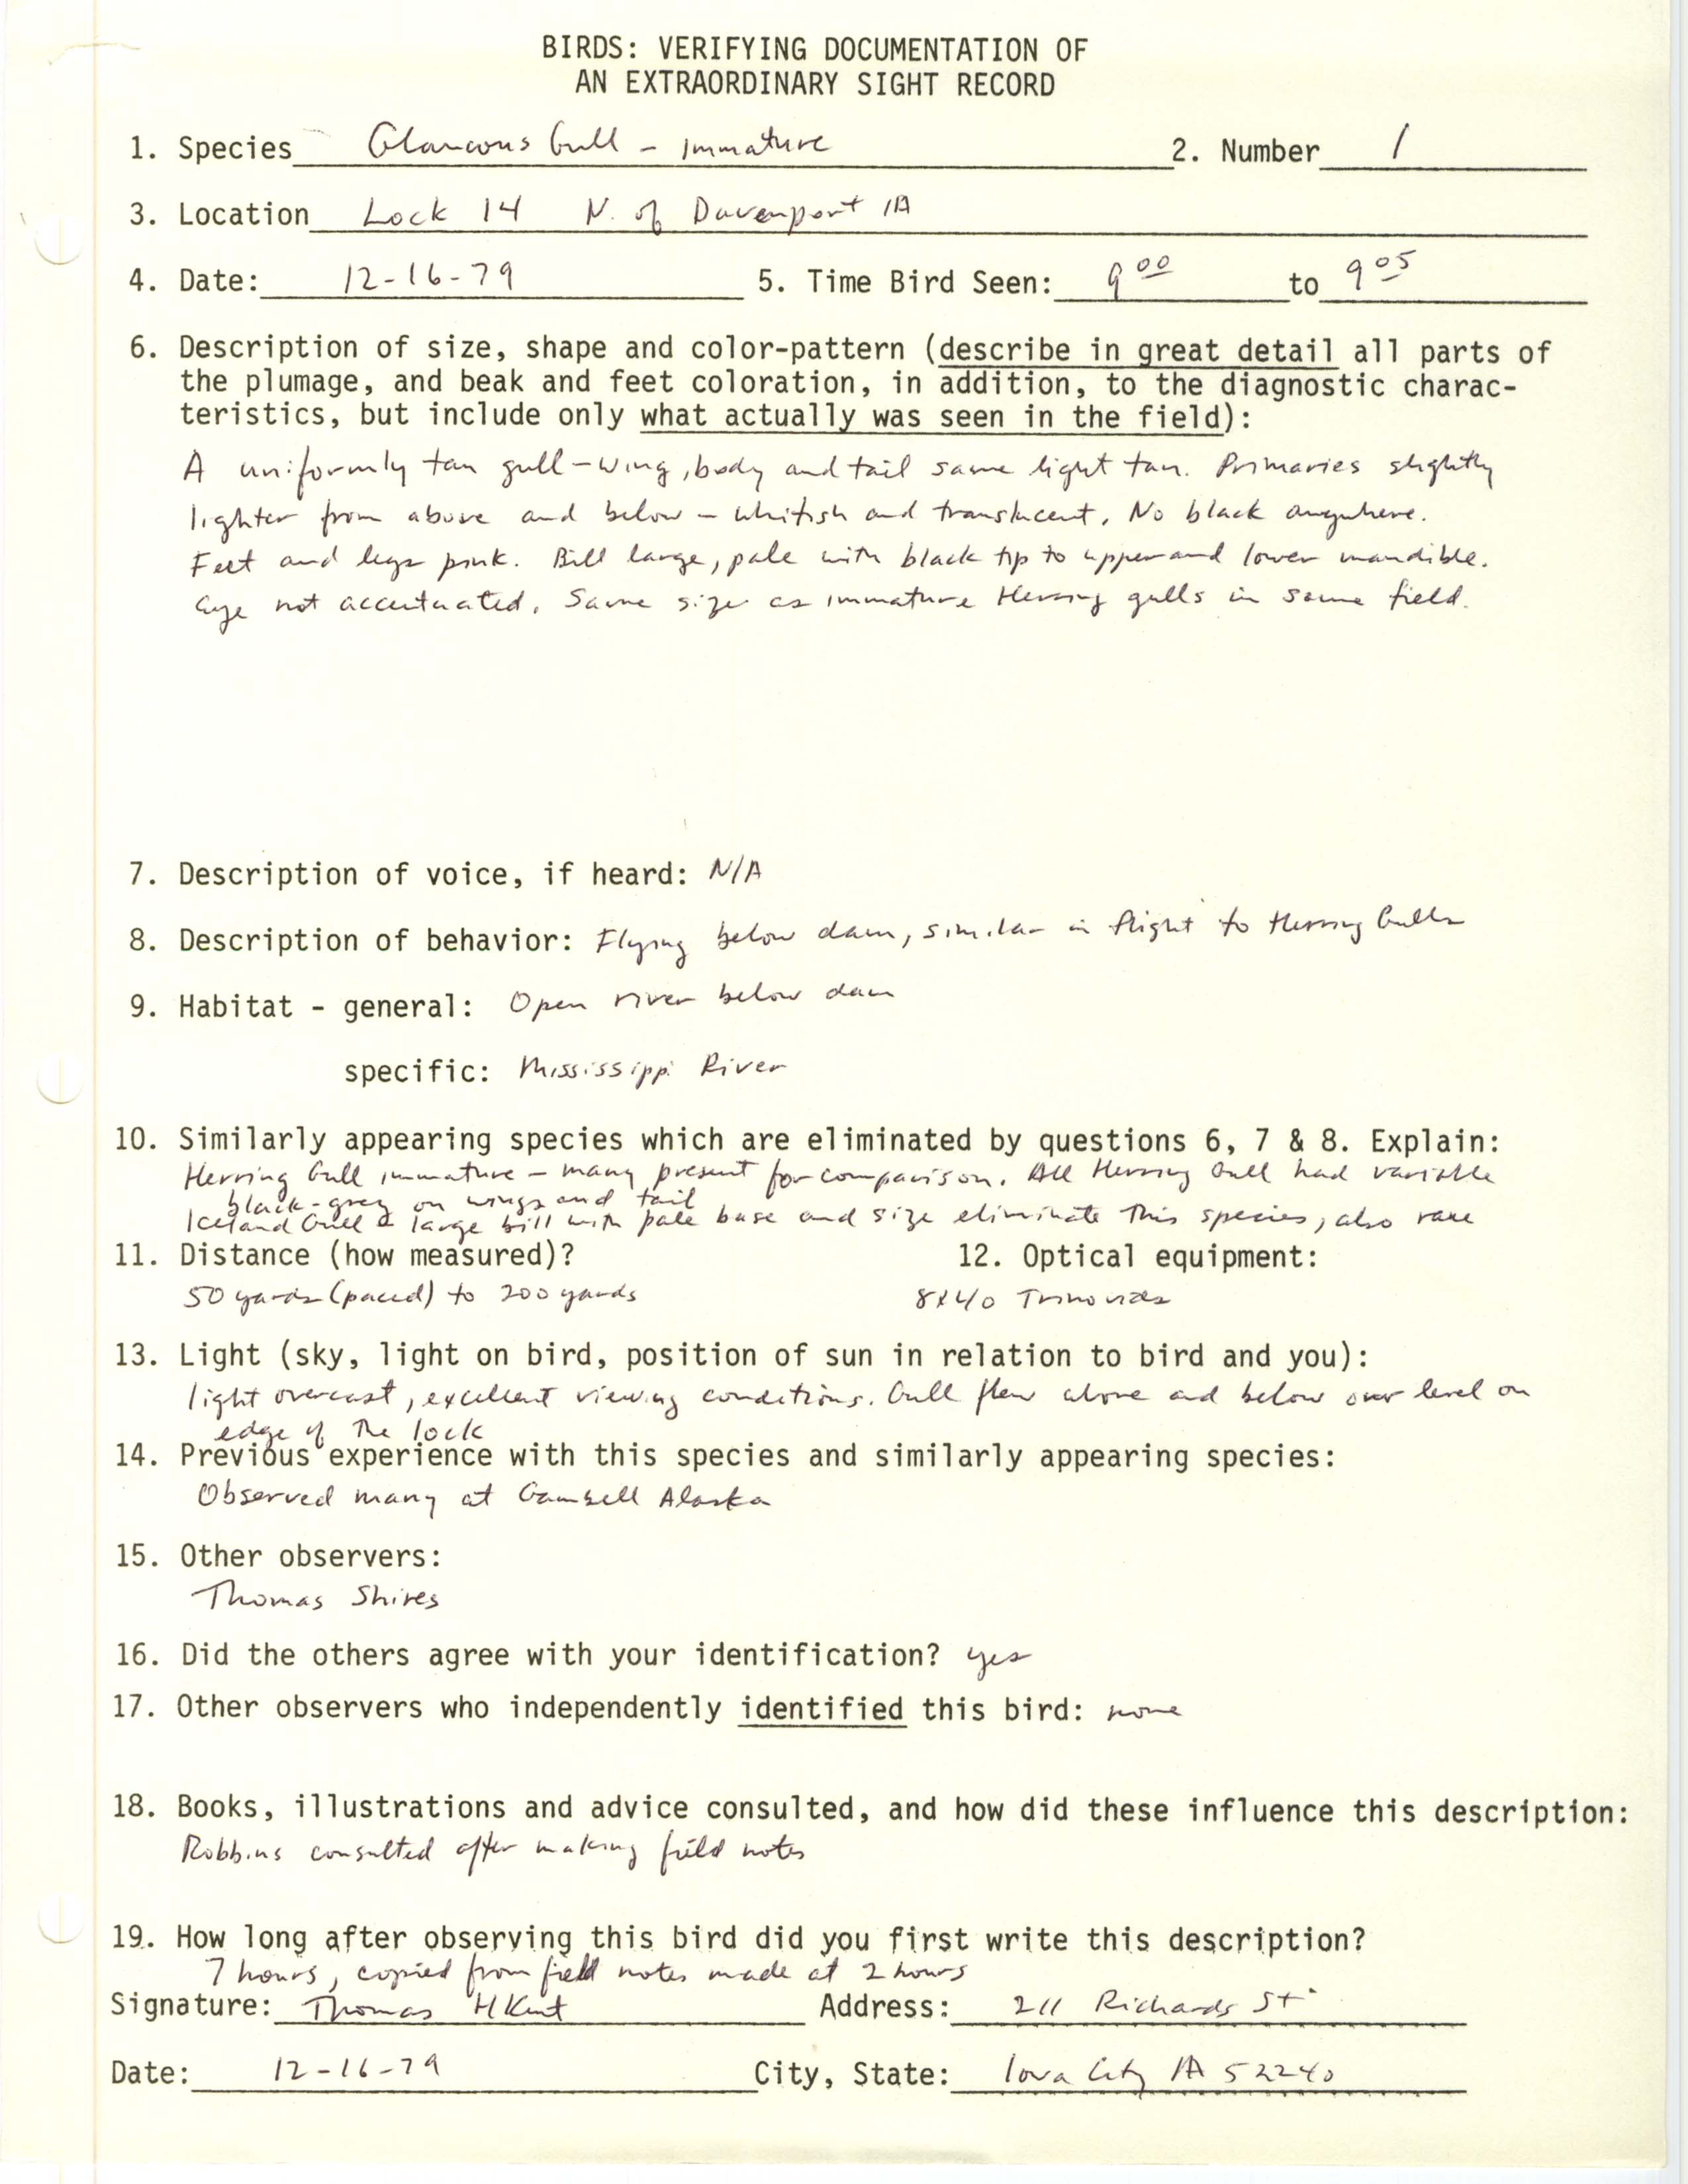 Rare bird documentation form for Glaucous Gull at Lock and Dam 14 near Davenport, 1979